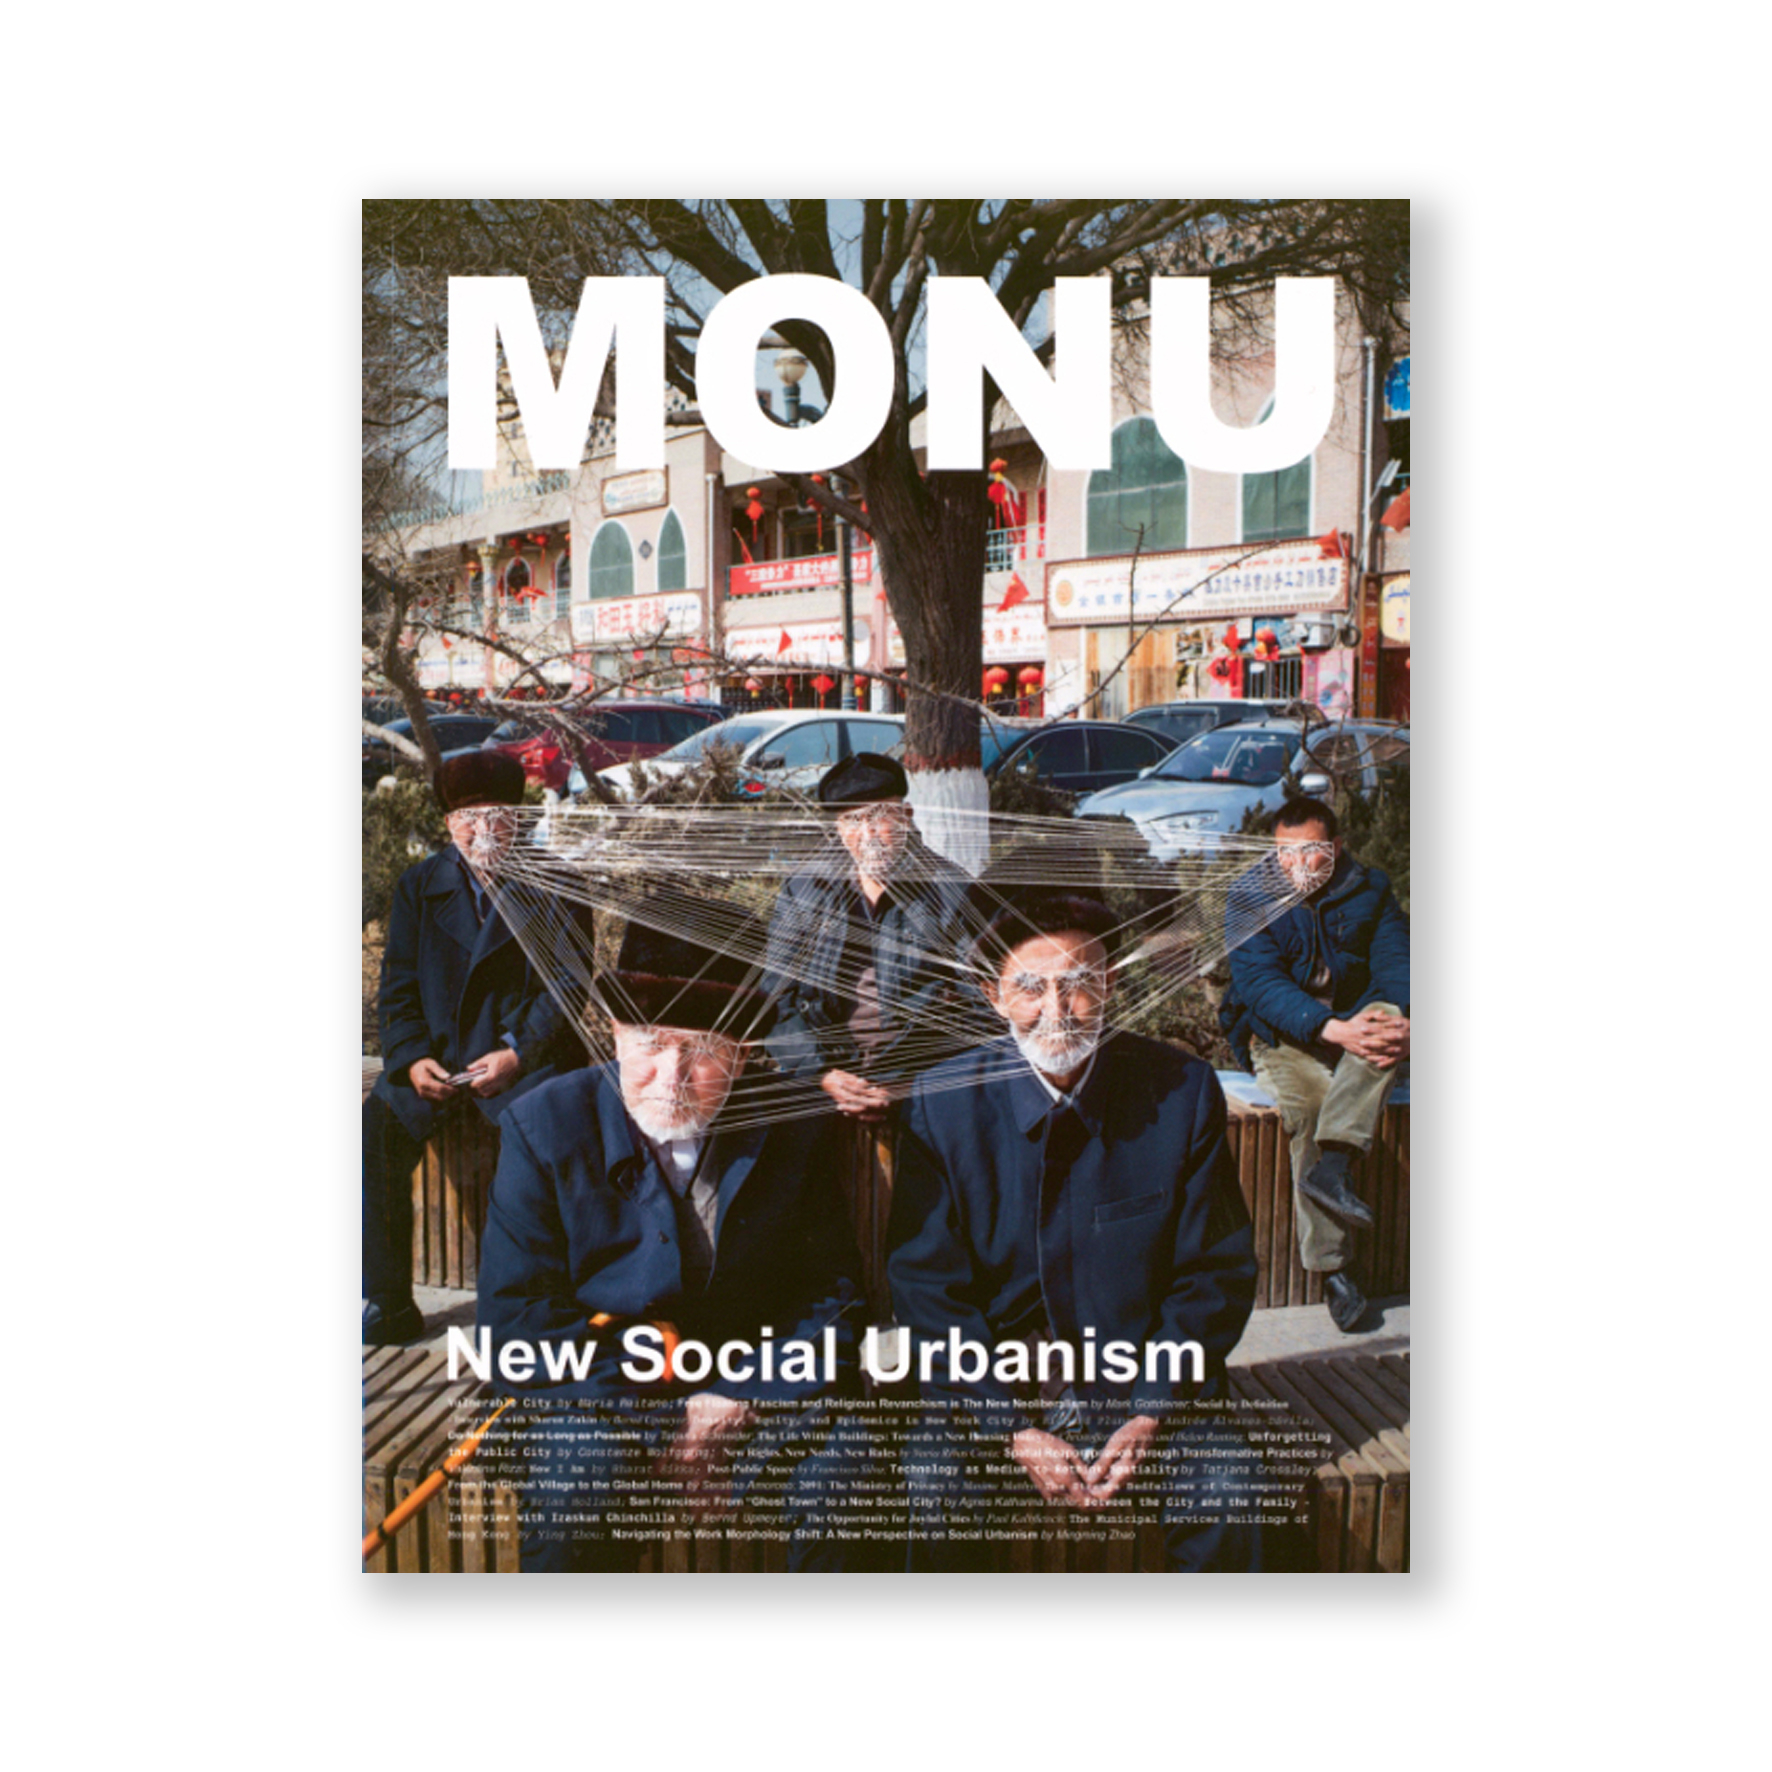 MONU 36: New Social Urbanism